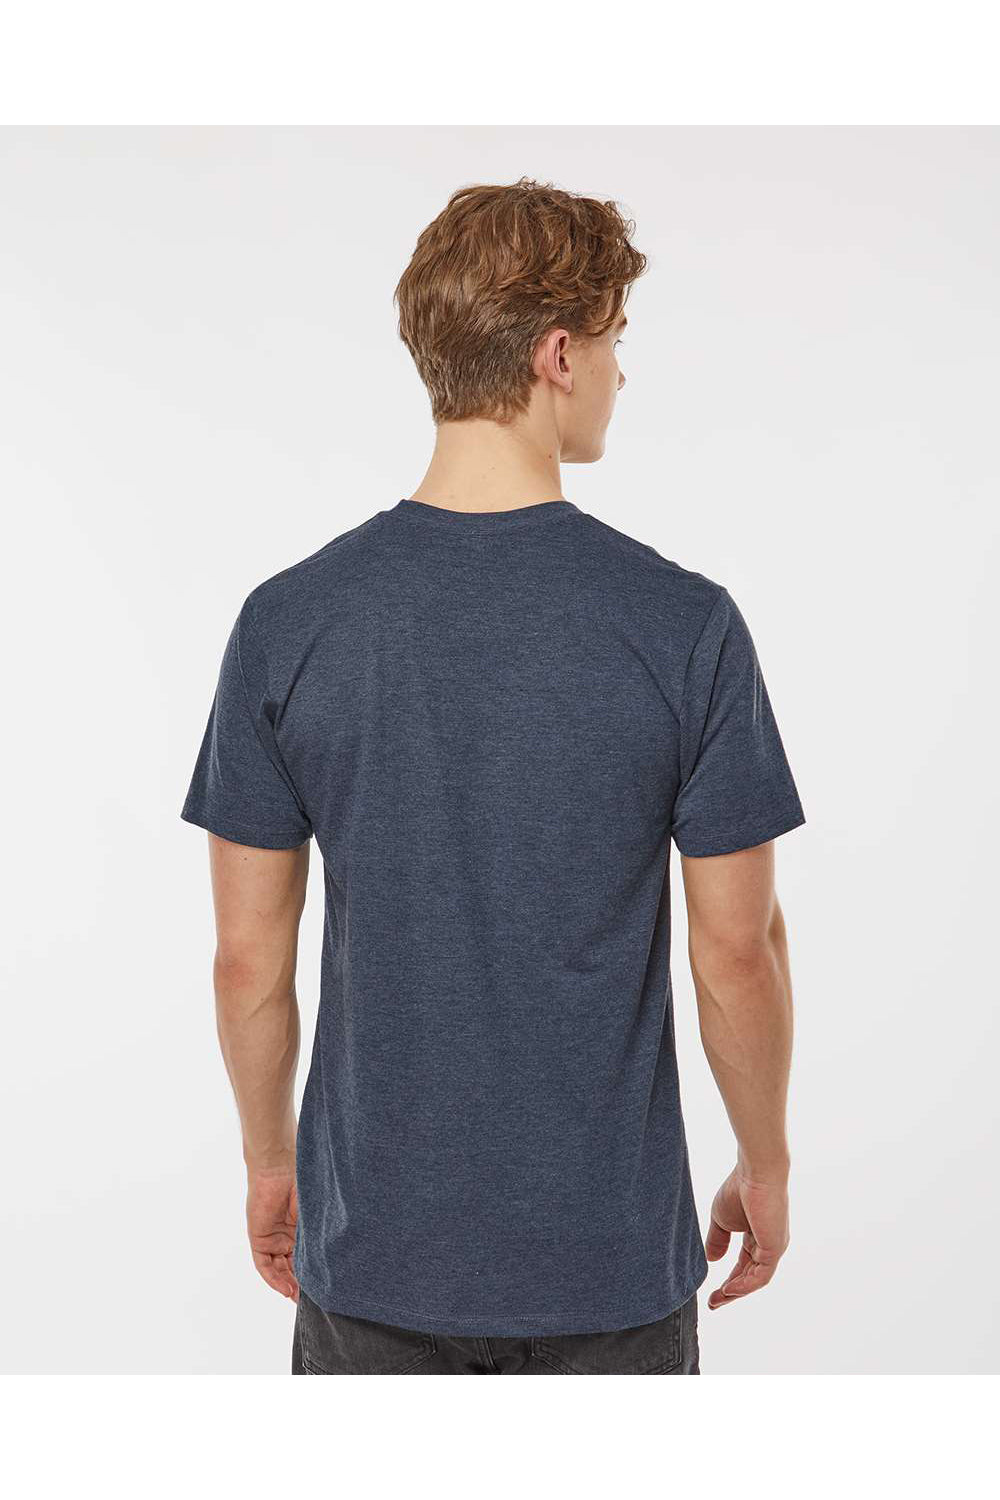 Tultex 541 Mens Premium Short Sleeve Crewneck T-Shirt Heather Navy Blue Model Back